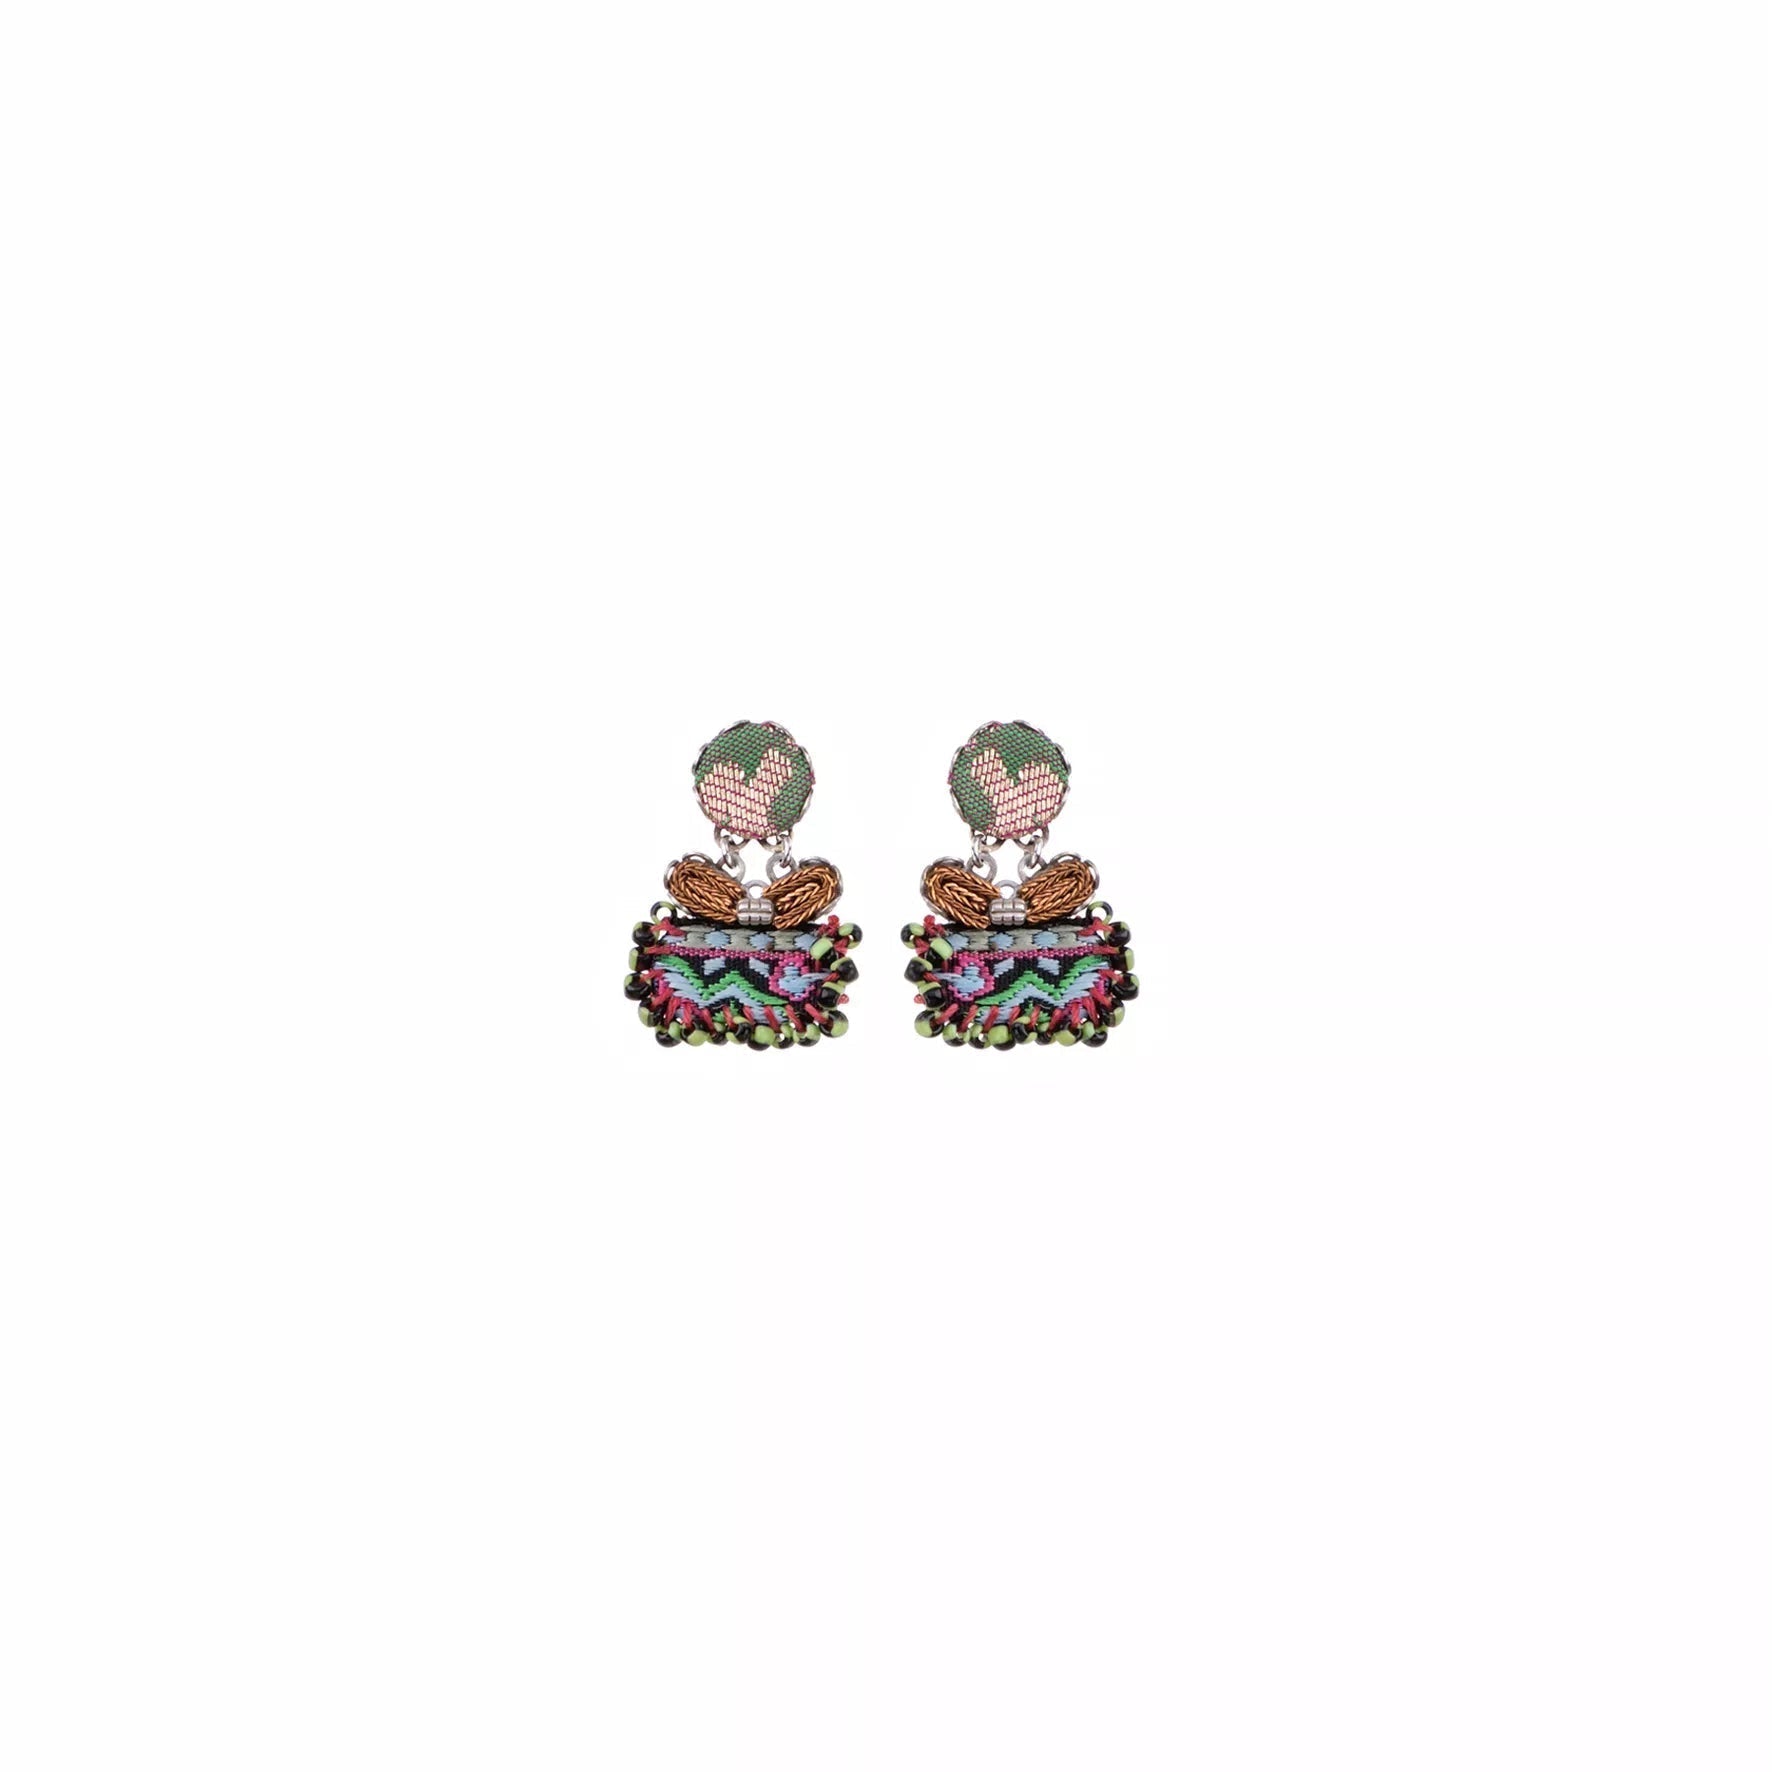 Champagne Kiana Earrings - The Nancy Smillie Shop - Art, Jewellery & Designer Gifts Glasgow